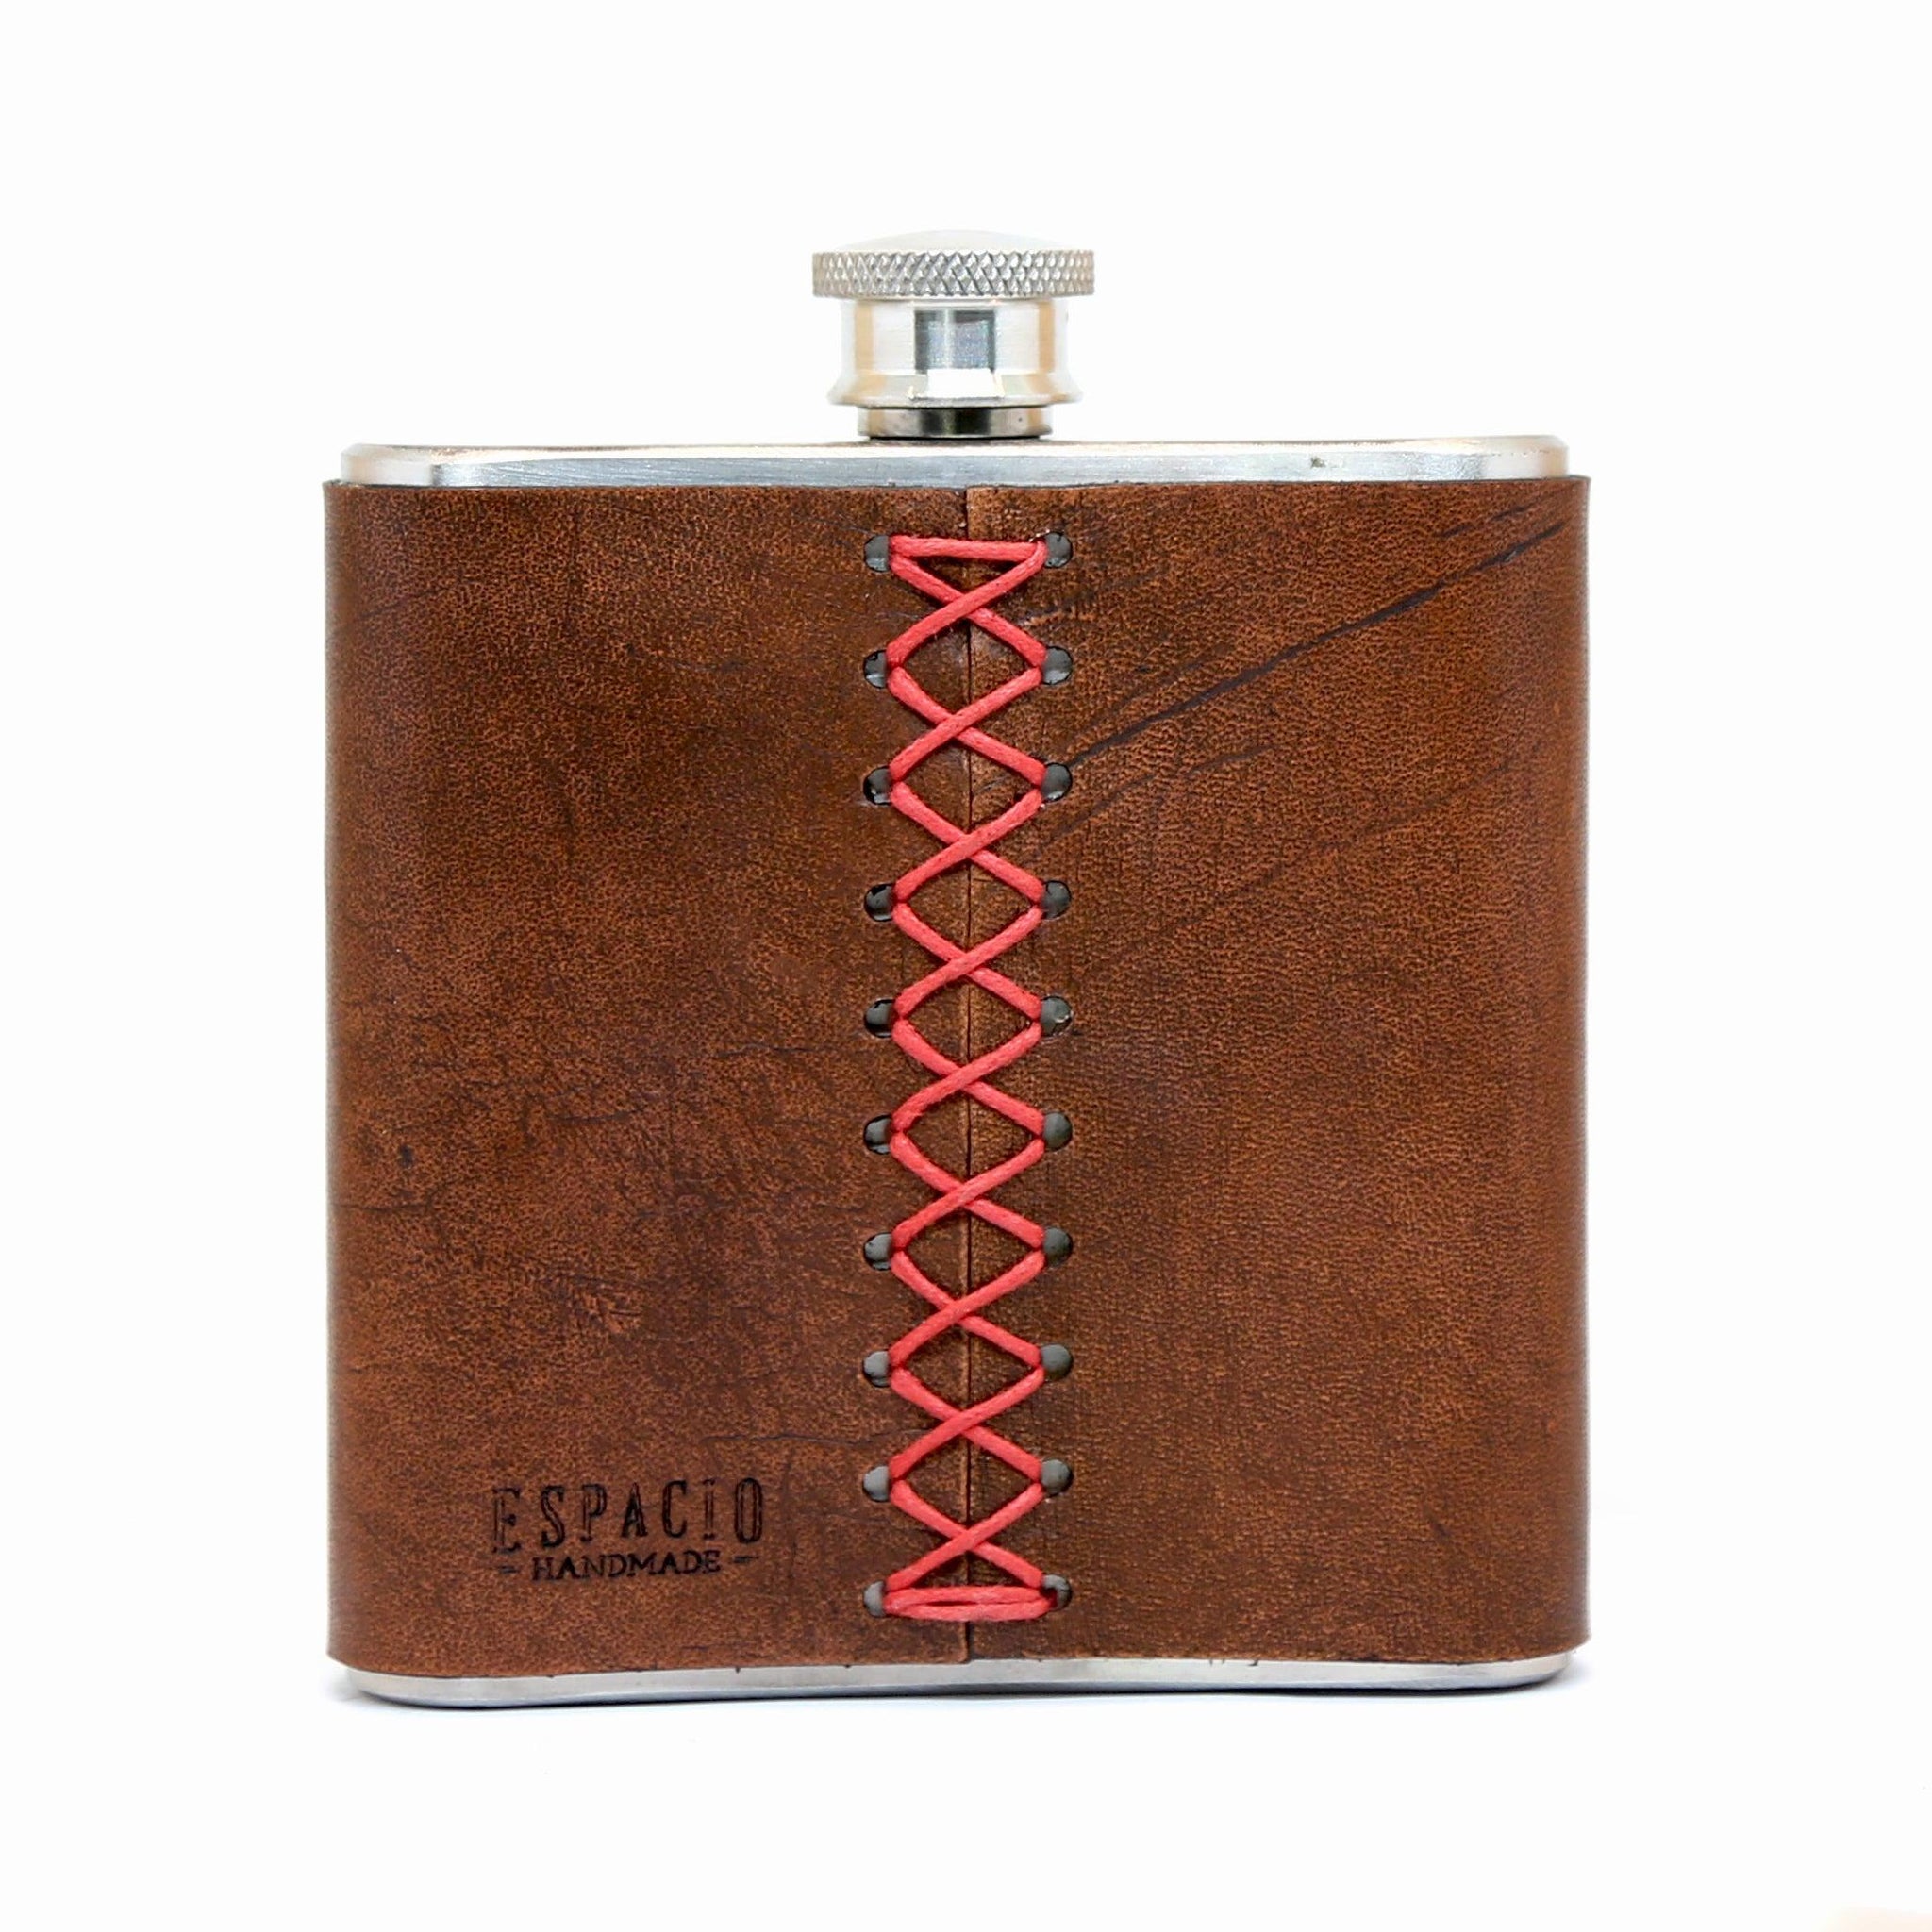 Personalized Engraved Leather Hip Flask - Espacio Handmade